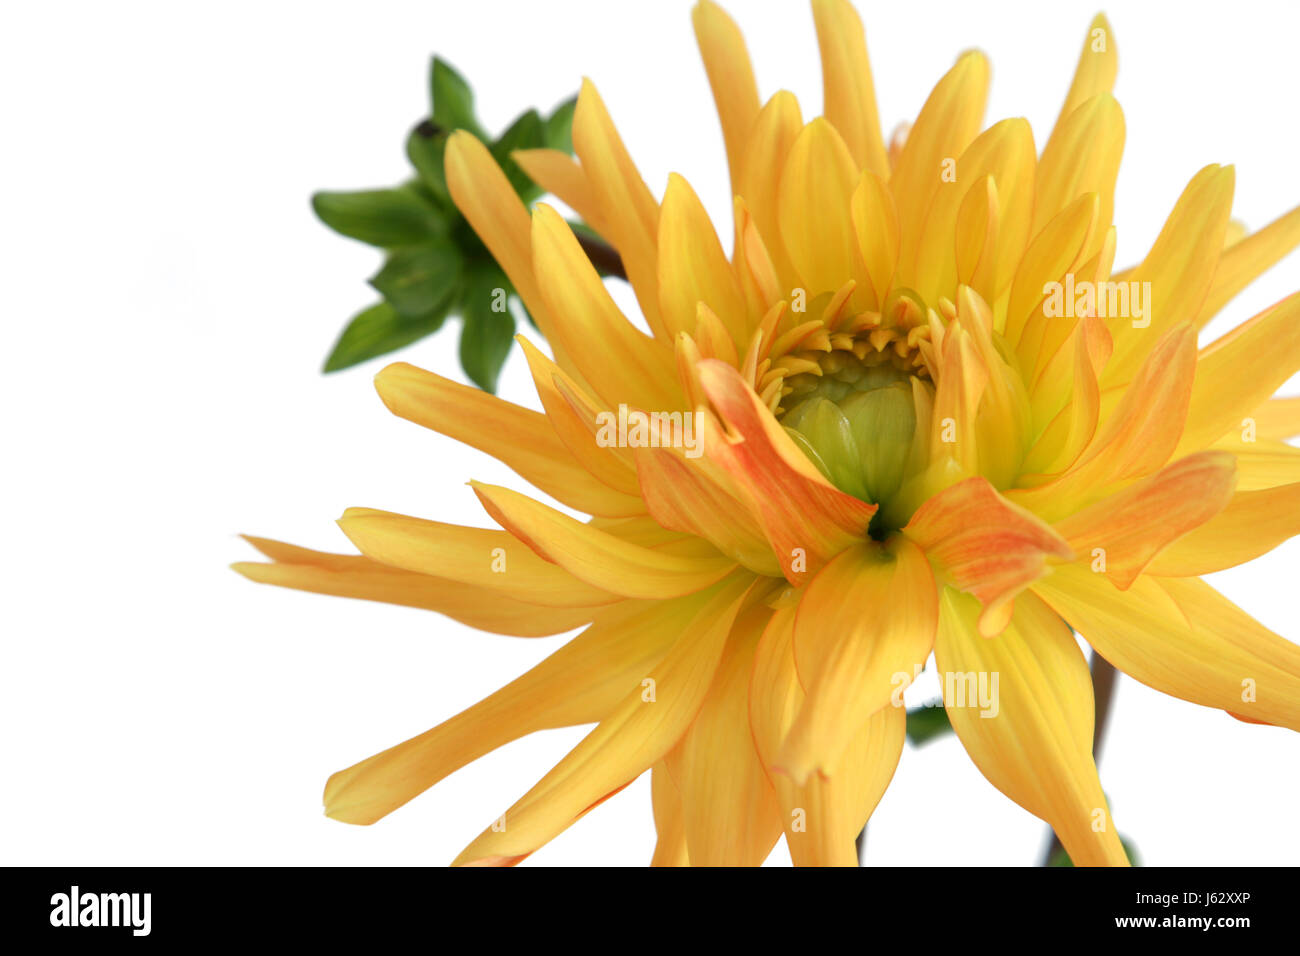 isolated flower plant botany dahlia decorative yellow glass chalice tumbler Stock Photo